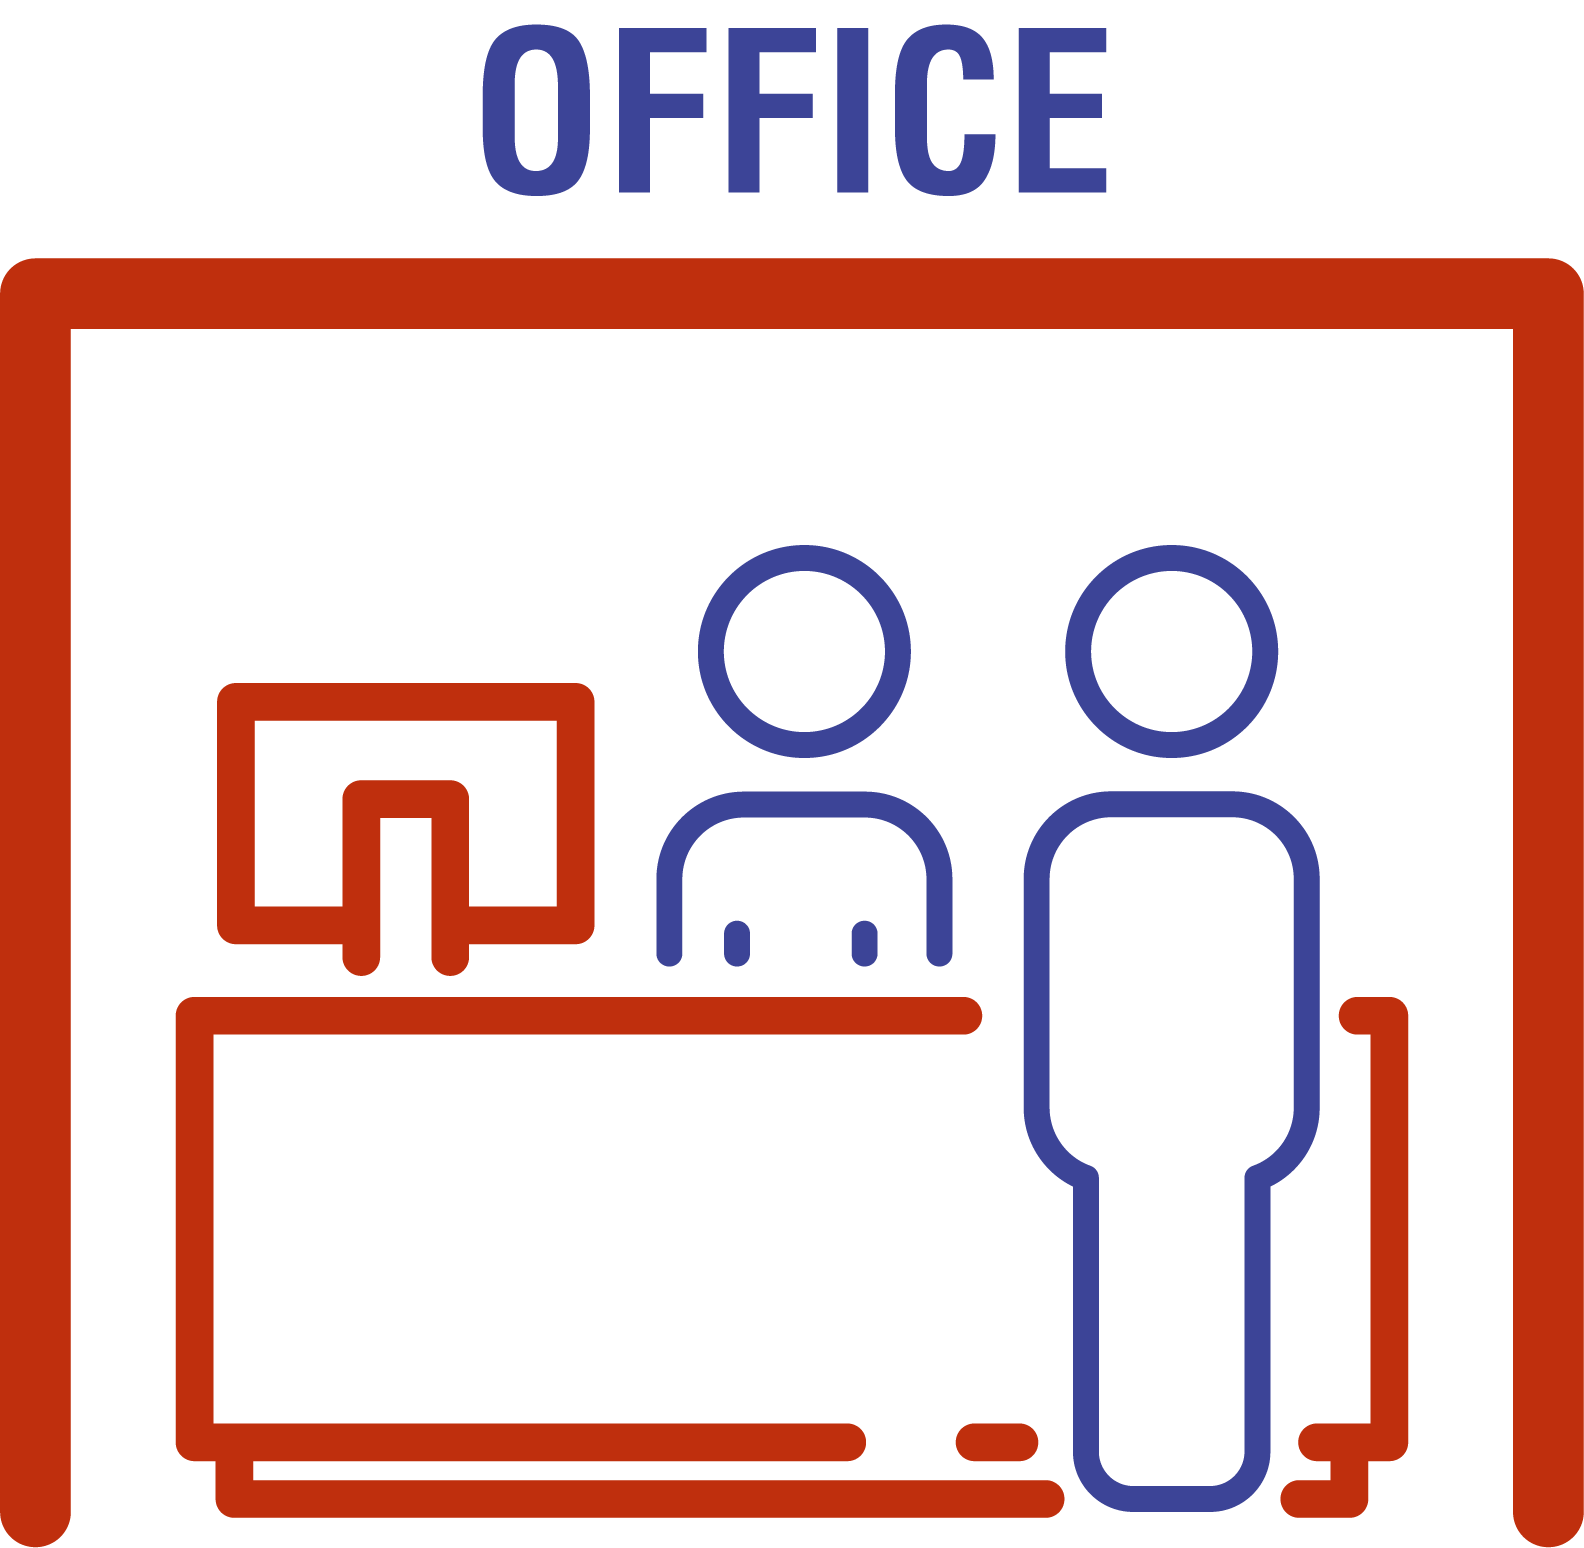 Office_staff_icon